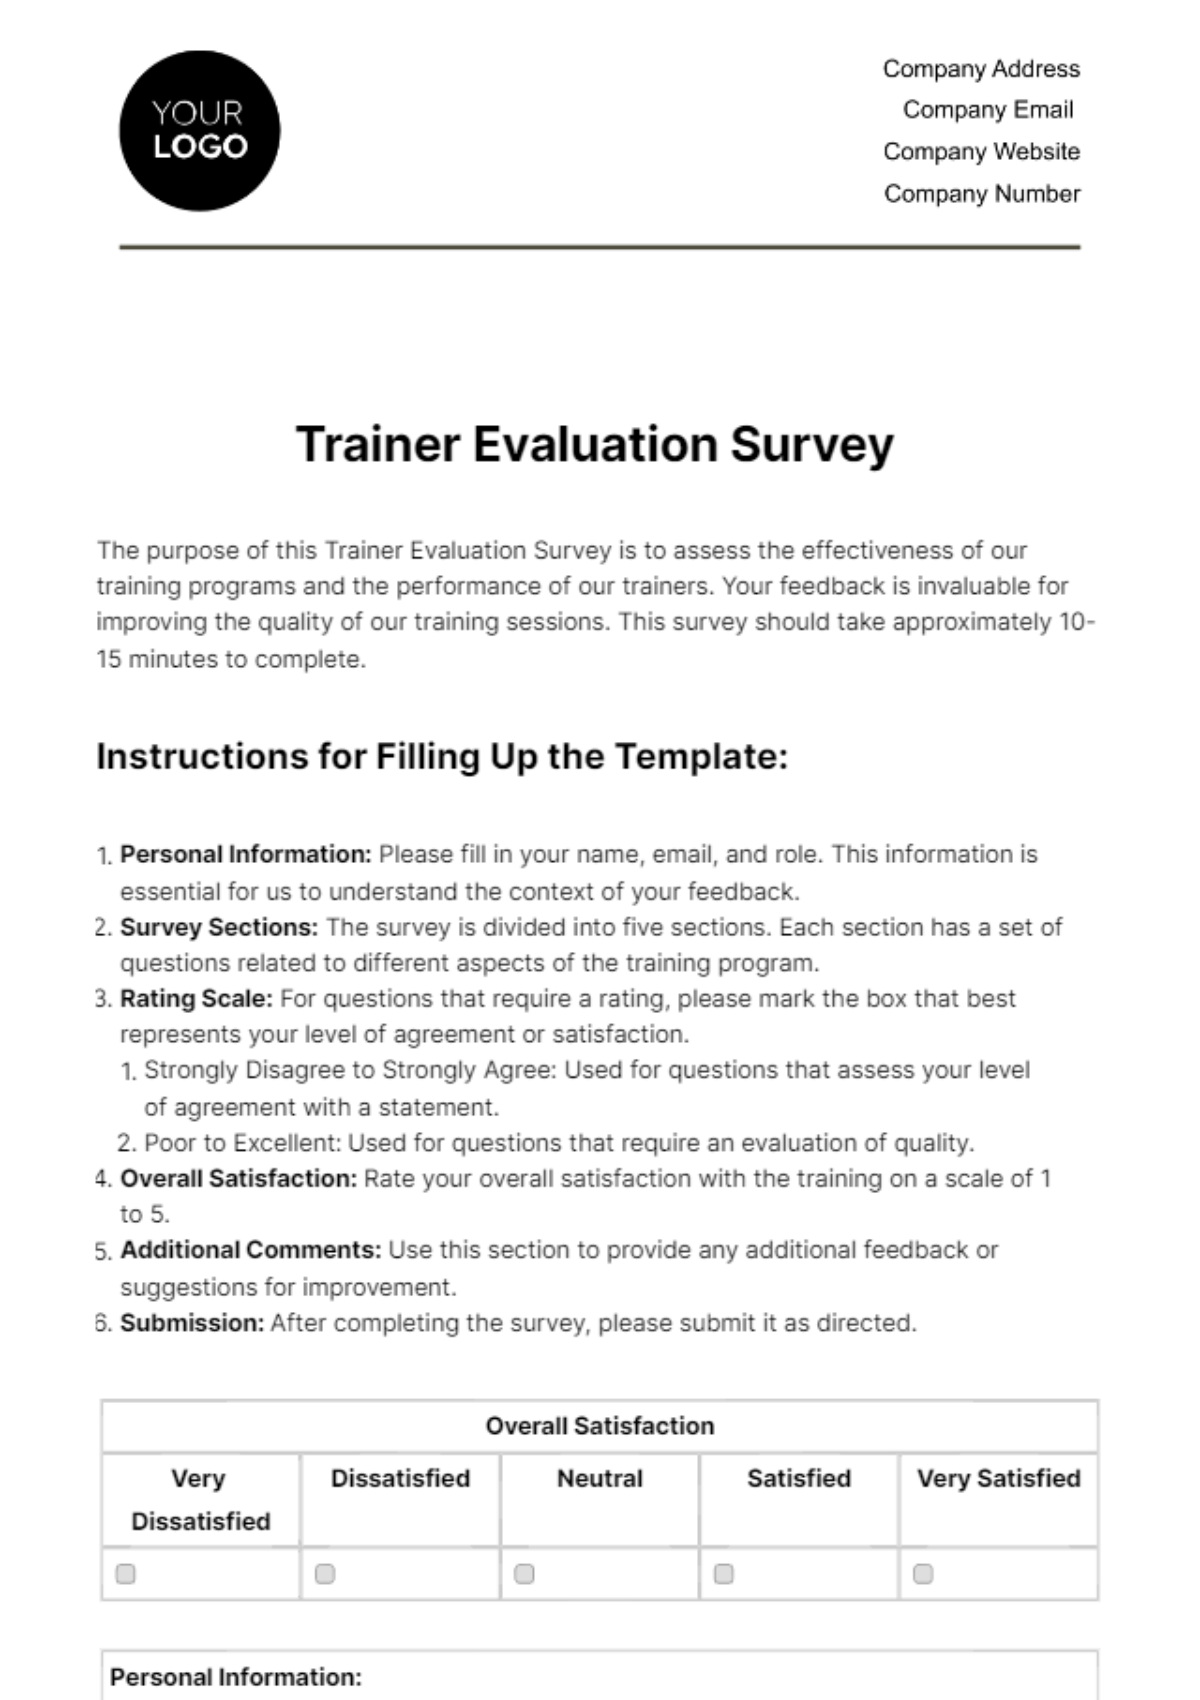 Free Trainer Evaluation Survey HR Template